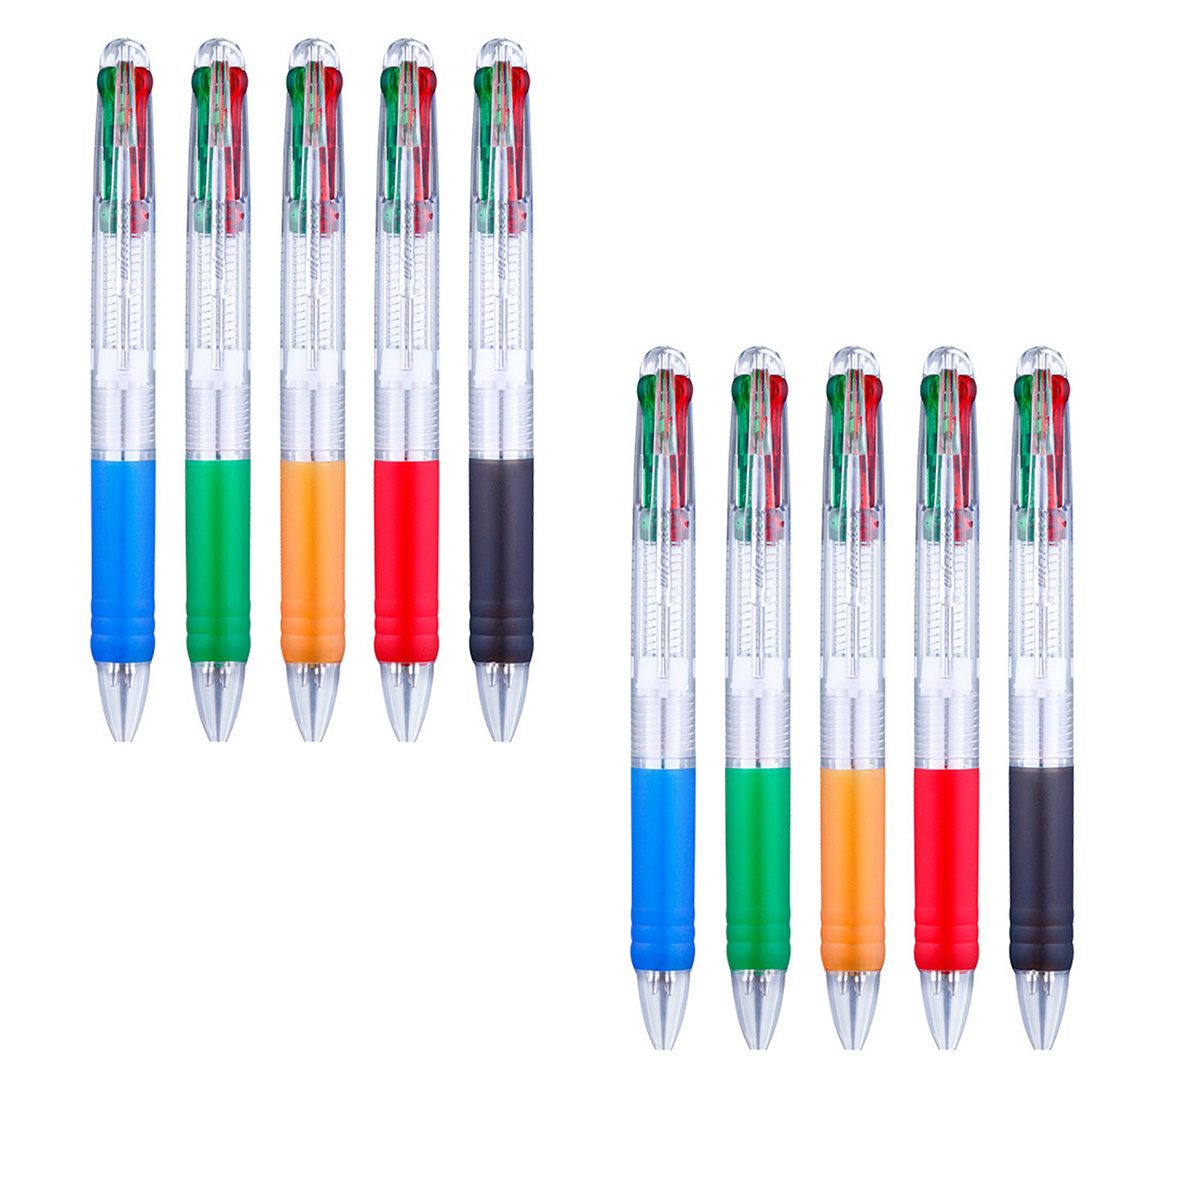 Favourde: 22 bolígrafos multicolor 6 en 1 de 0.020 pulgadas, 6 colores de  bolígrafos retráctiles para suministros escolares, de oficina, regalo para